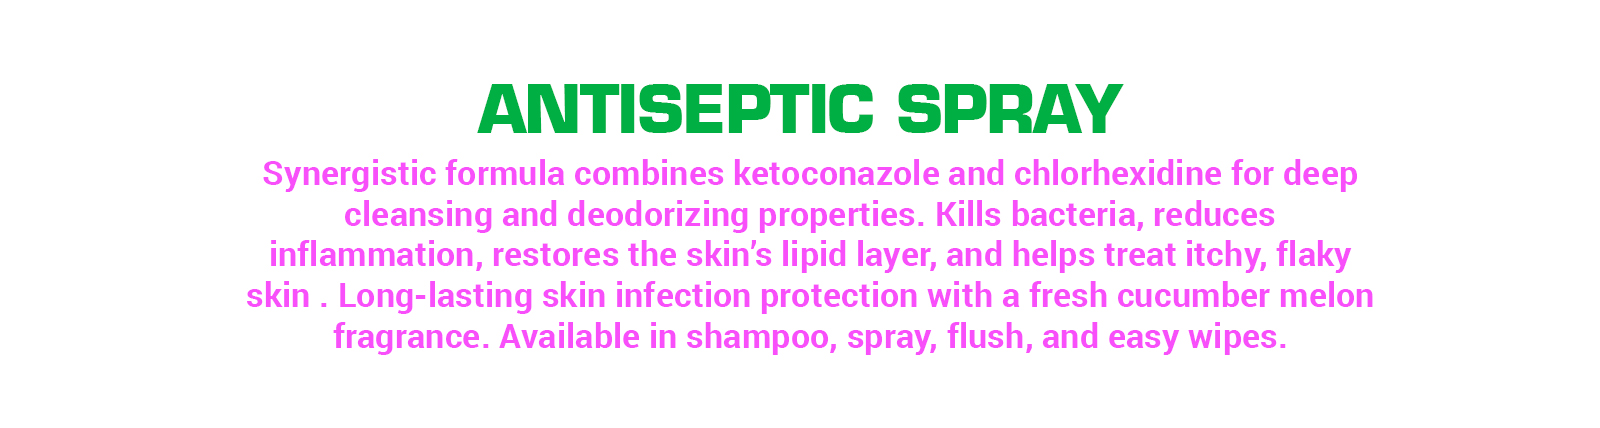 antiseptic-spray